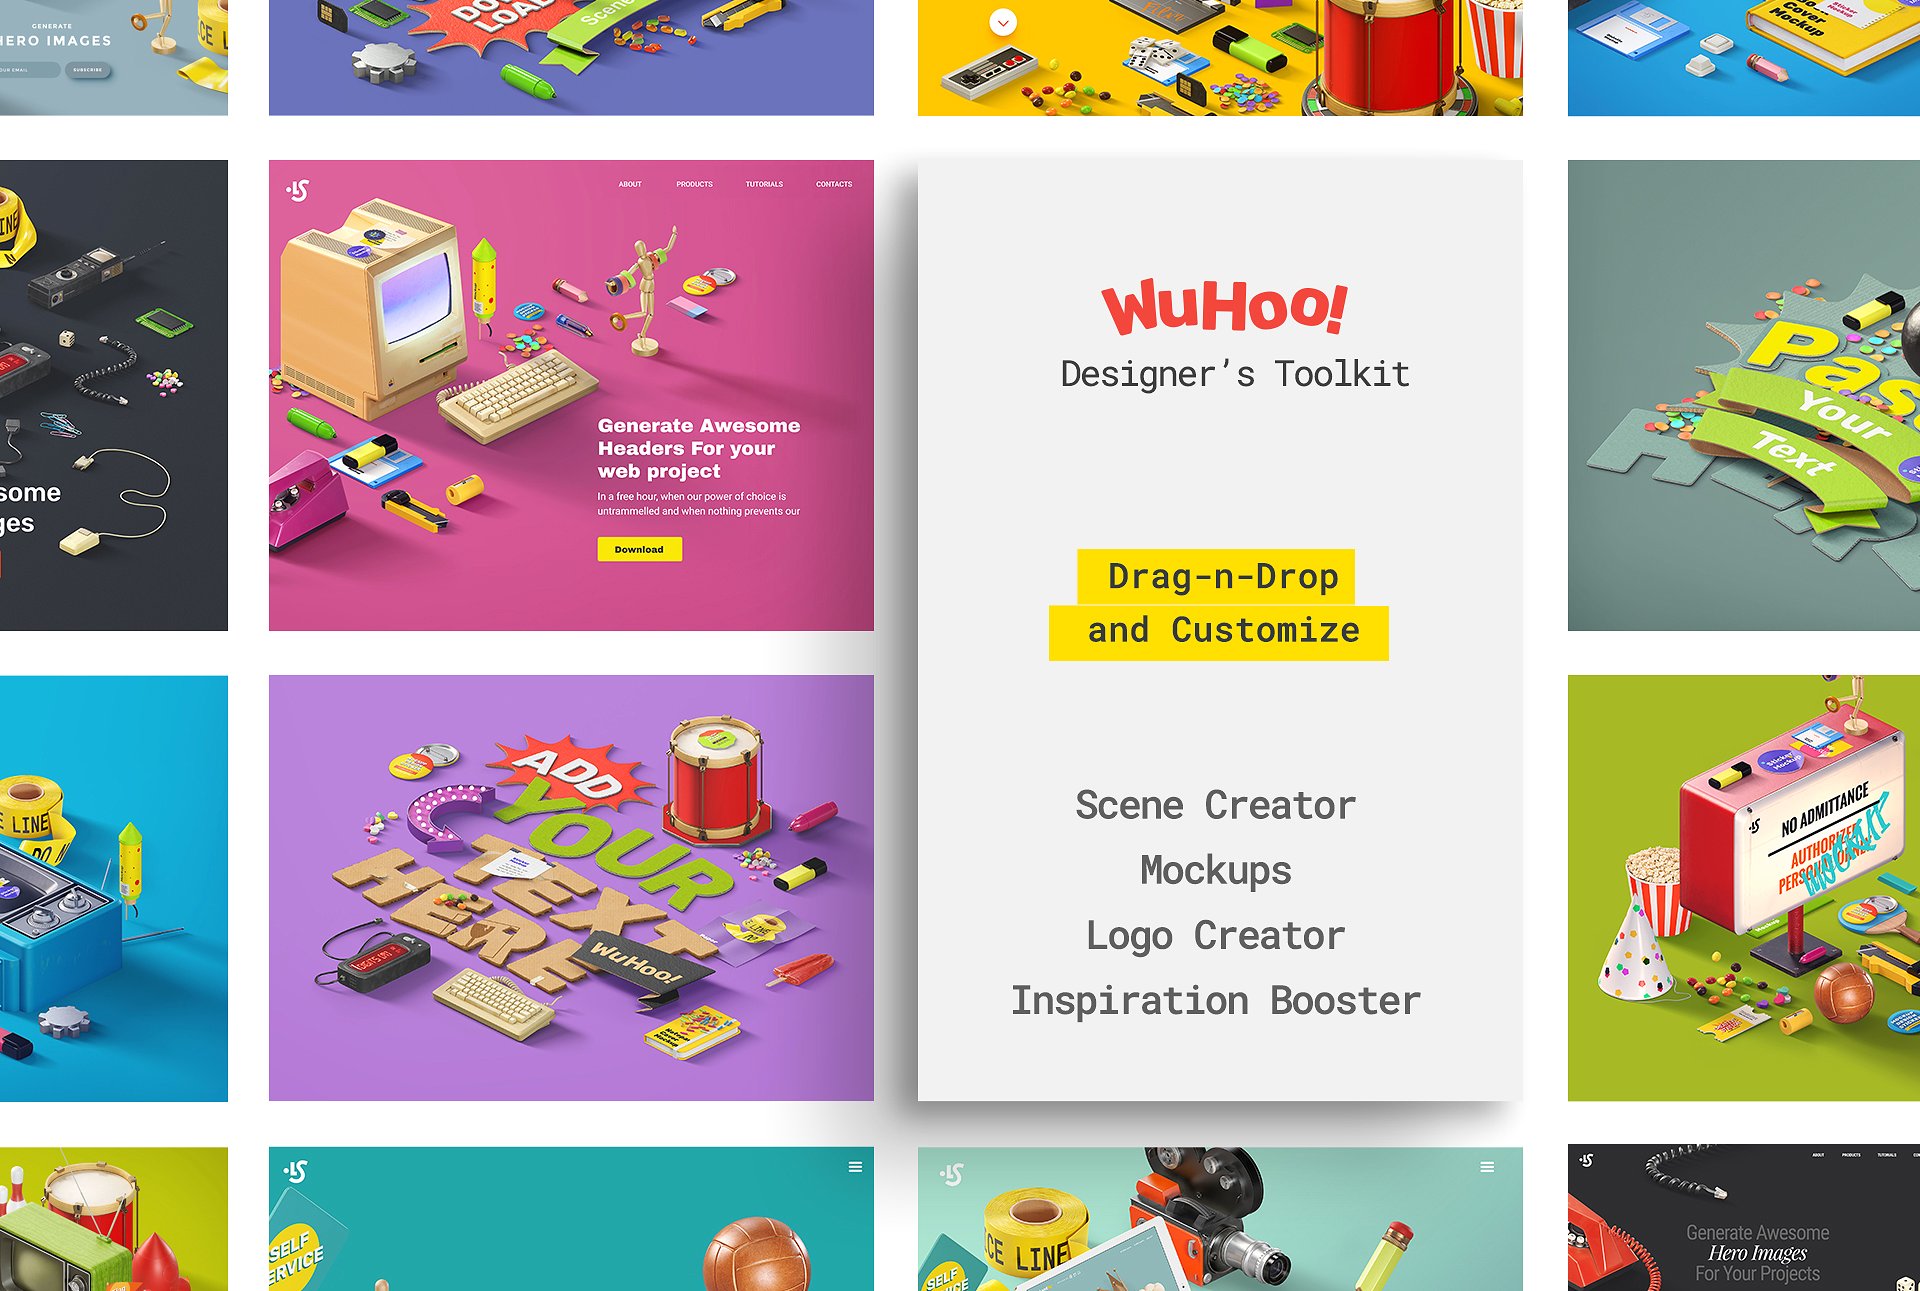 色彩引人注目的场景模板合集 WuHoo! Designer’s Toolkit [7.71GB]插图(1)